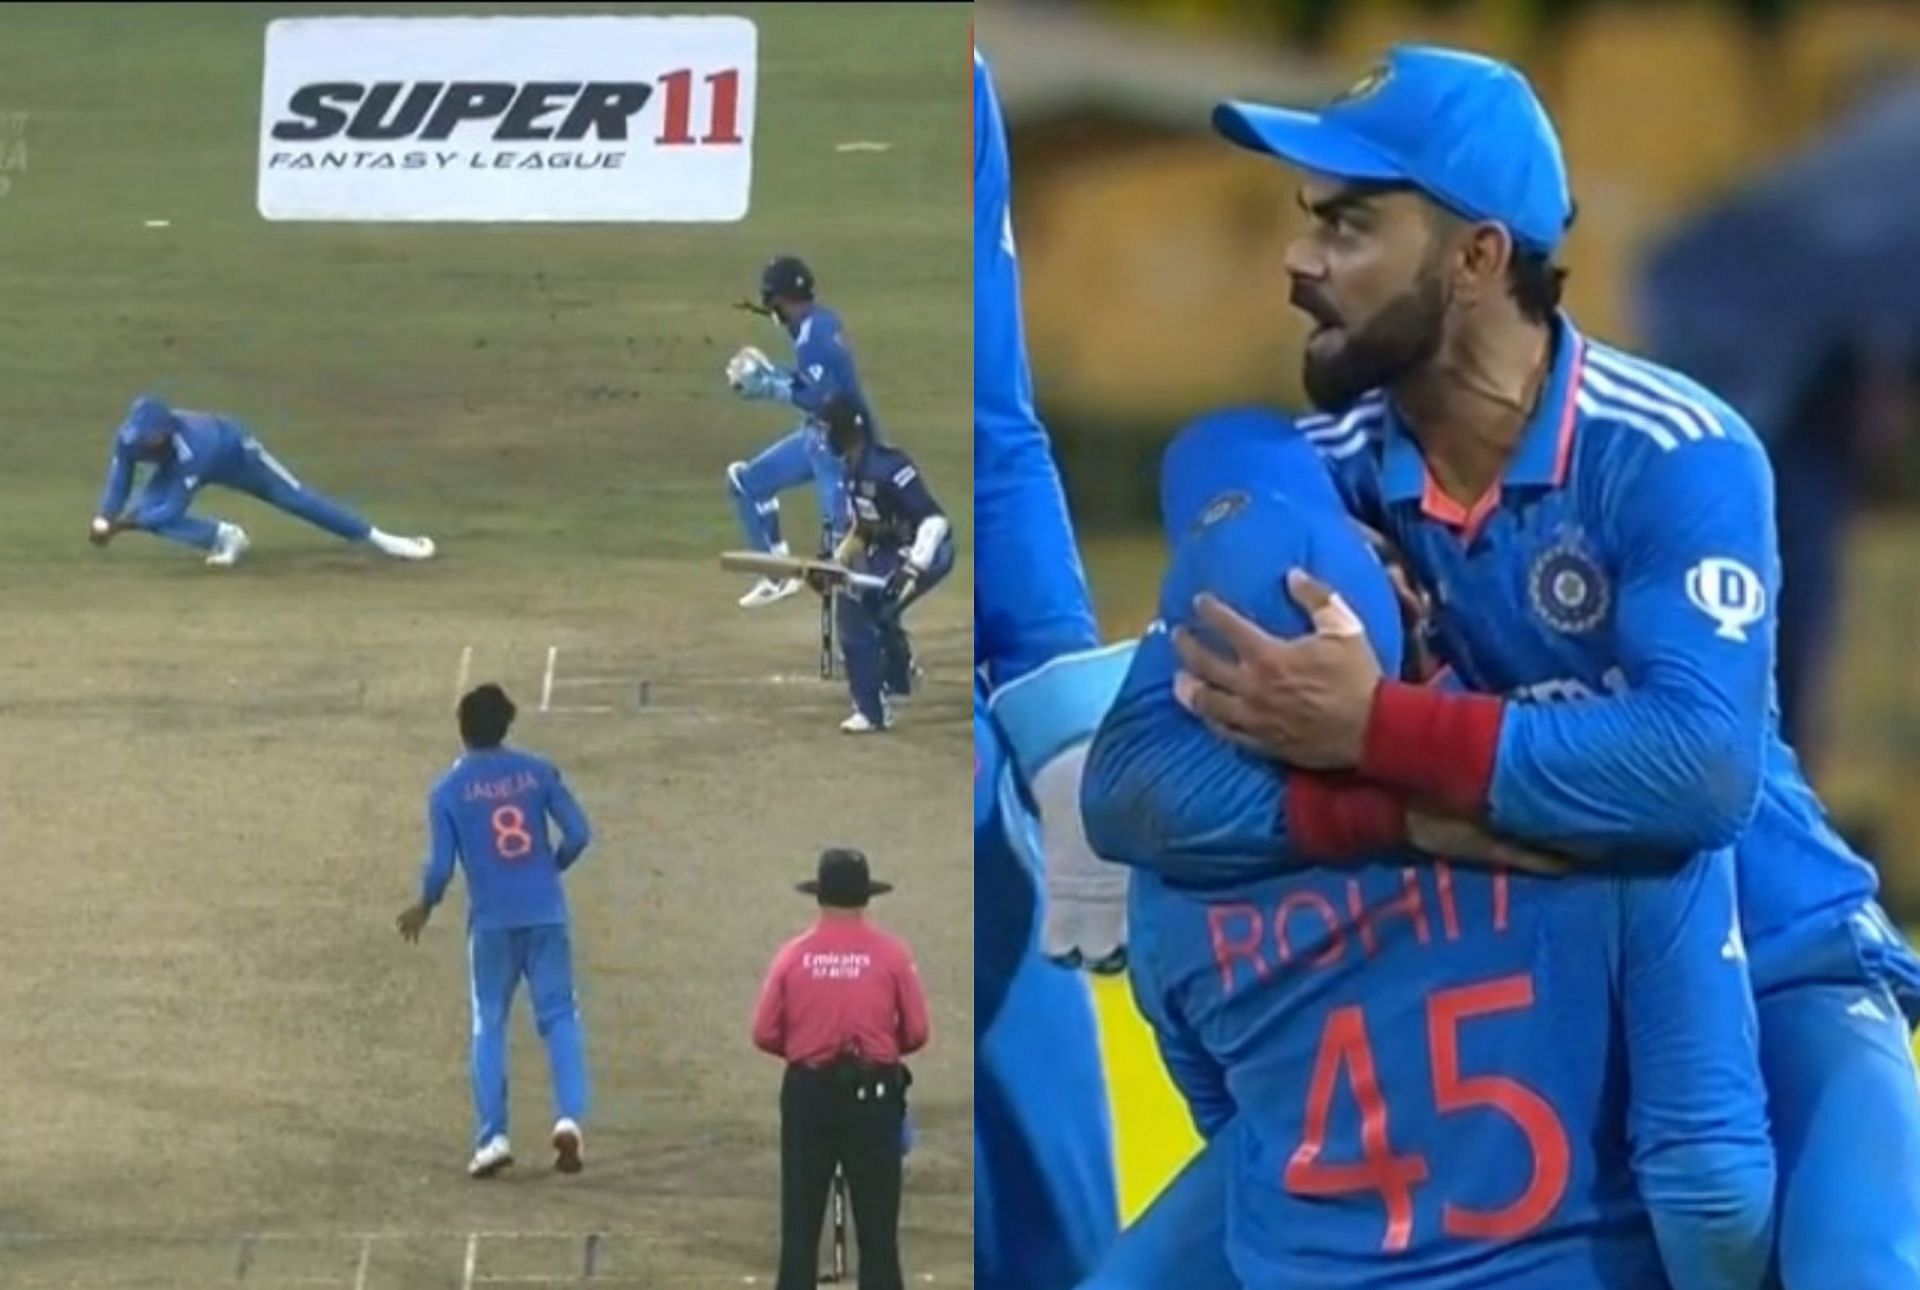 [Watch] Rohit Sharma hugged by Virat Kohli after taking stunning slip catch in IND vs SL Super 4 match